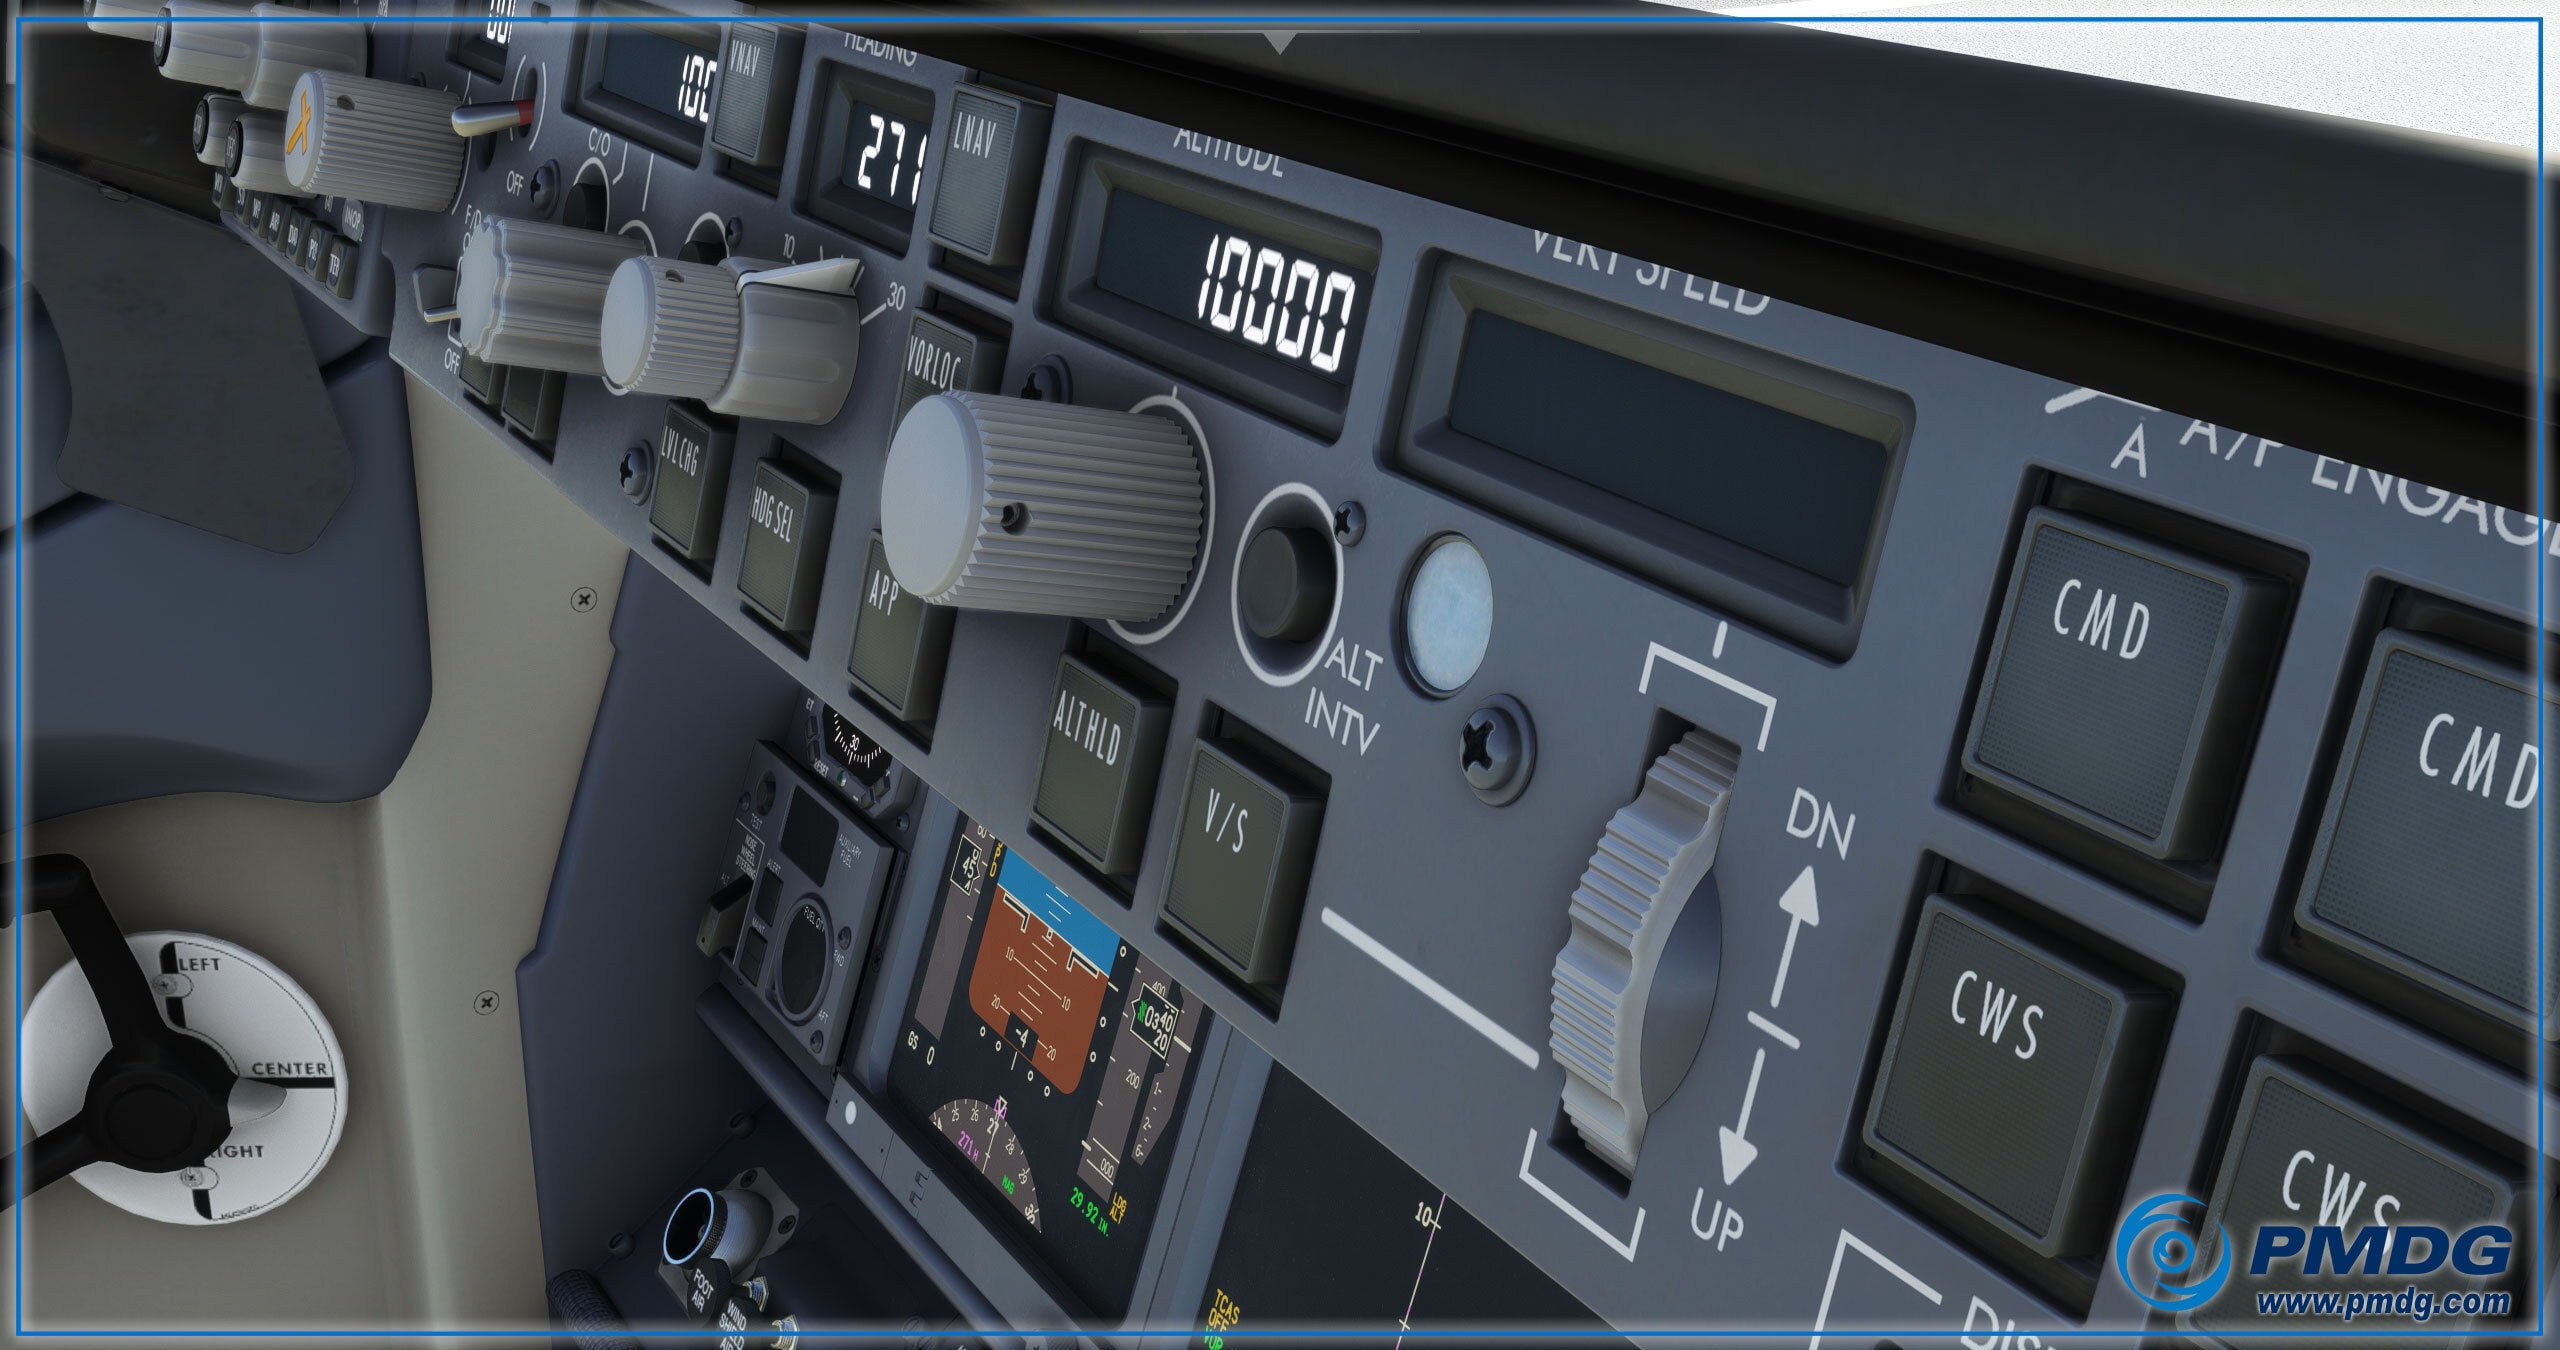 PMDG Confirms 737 MAX, Details 2019 Discounts, and Variant Releases - Microsoft Flight Simulator, PMDG